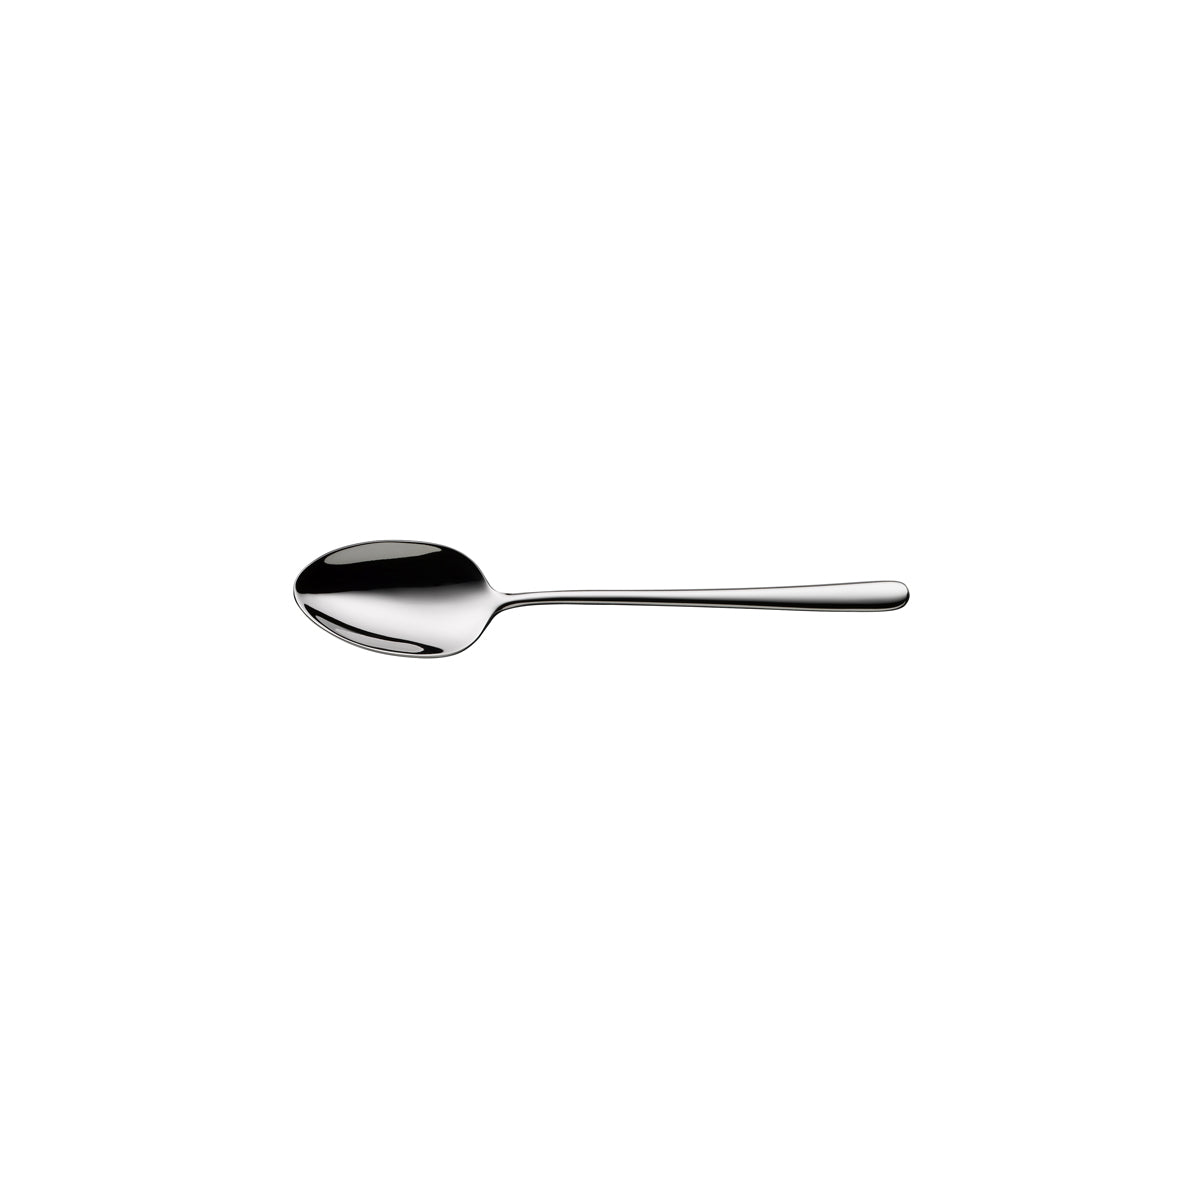 Wmf Scala Dessert Spoon 18/10 190mm: Pack of 12